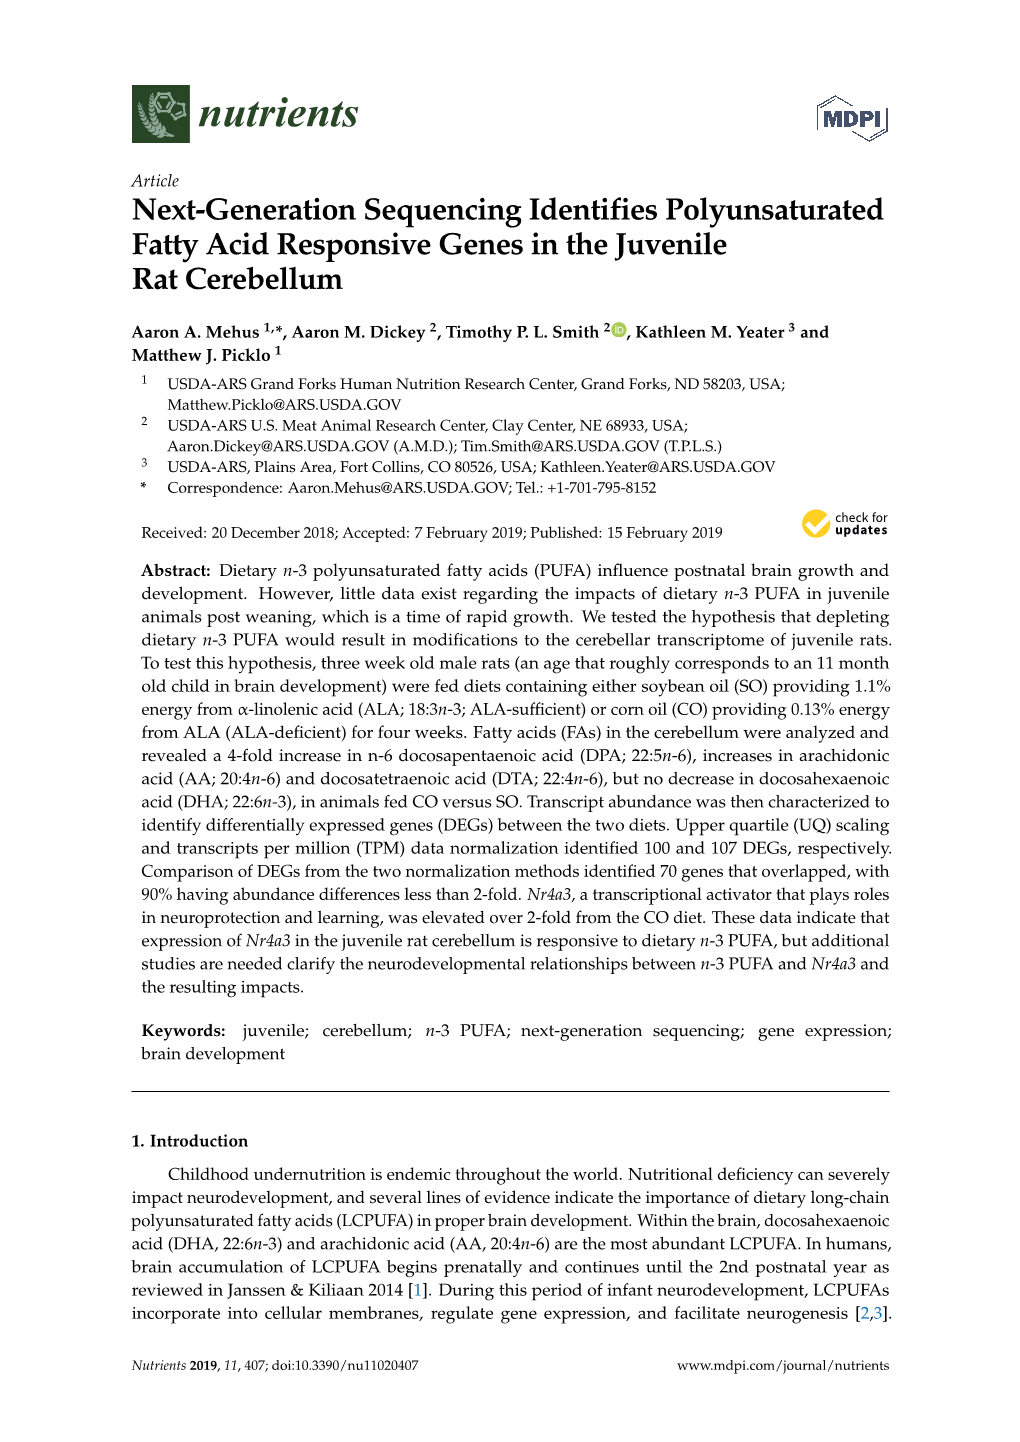 Next-Generation Sequencing Identifies Polyunsaturated Fatty Acid Responsive Genes in the Juvenile Rat Cerebellum